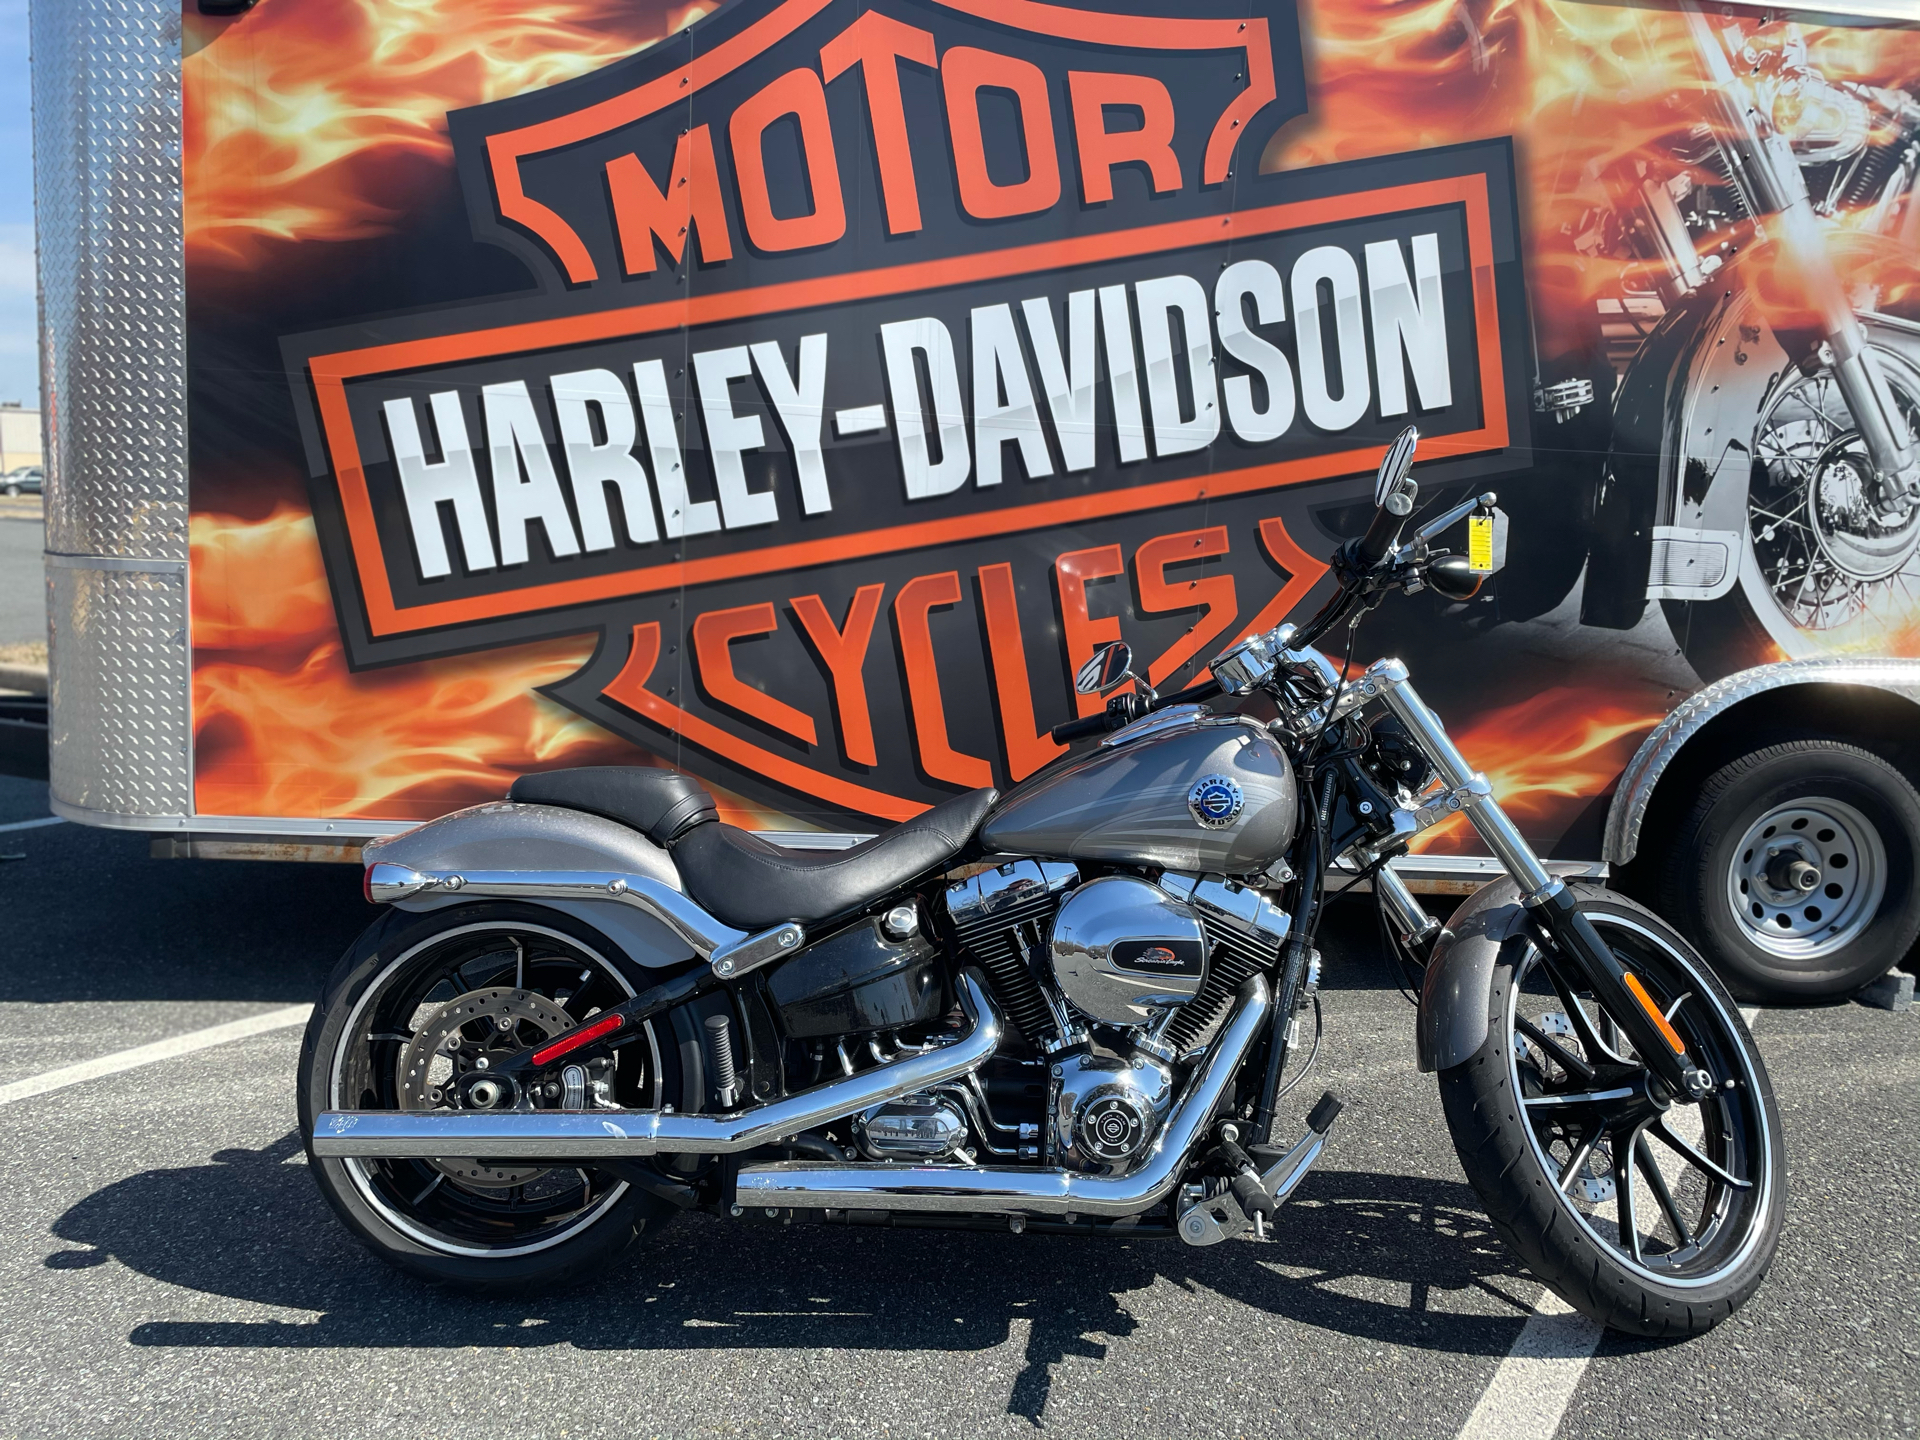 Used 2016 Harley Davidson Breakout Billet Silver Motorcycles In Orange Va 032396